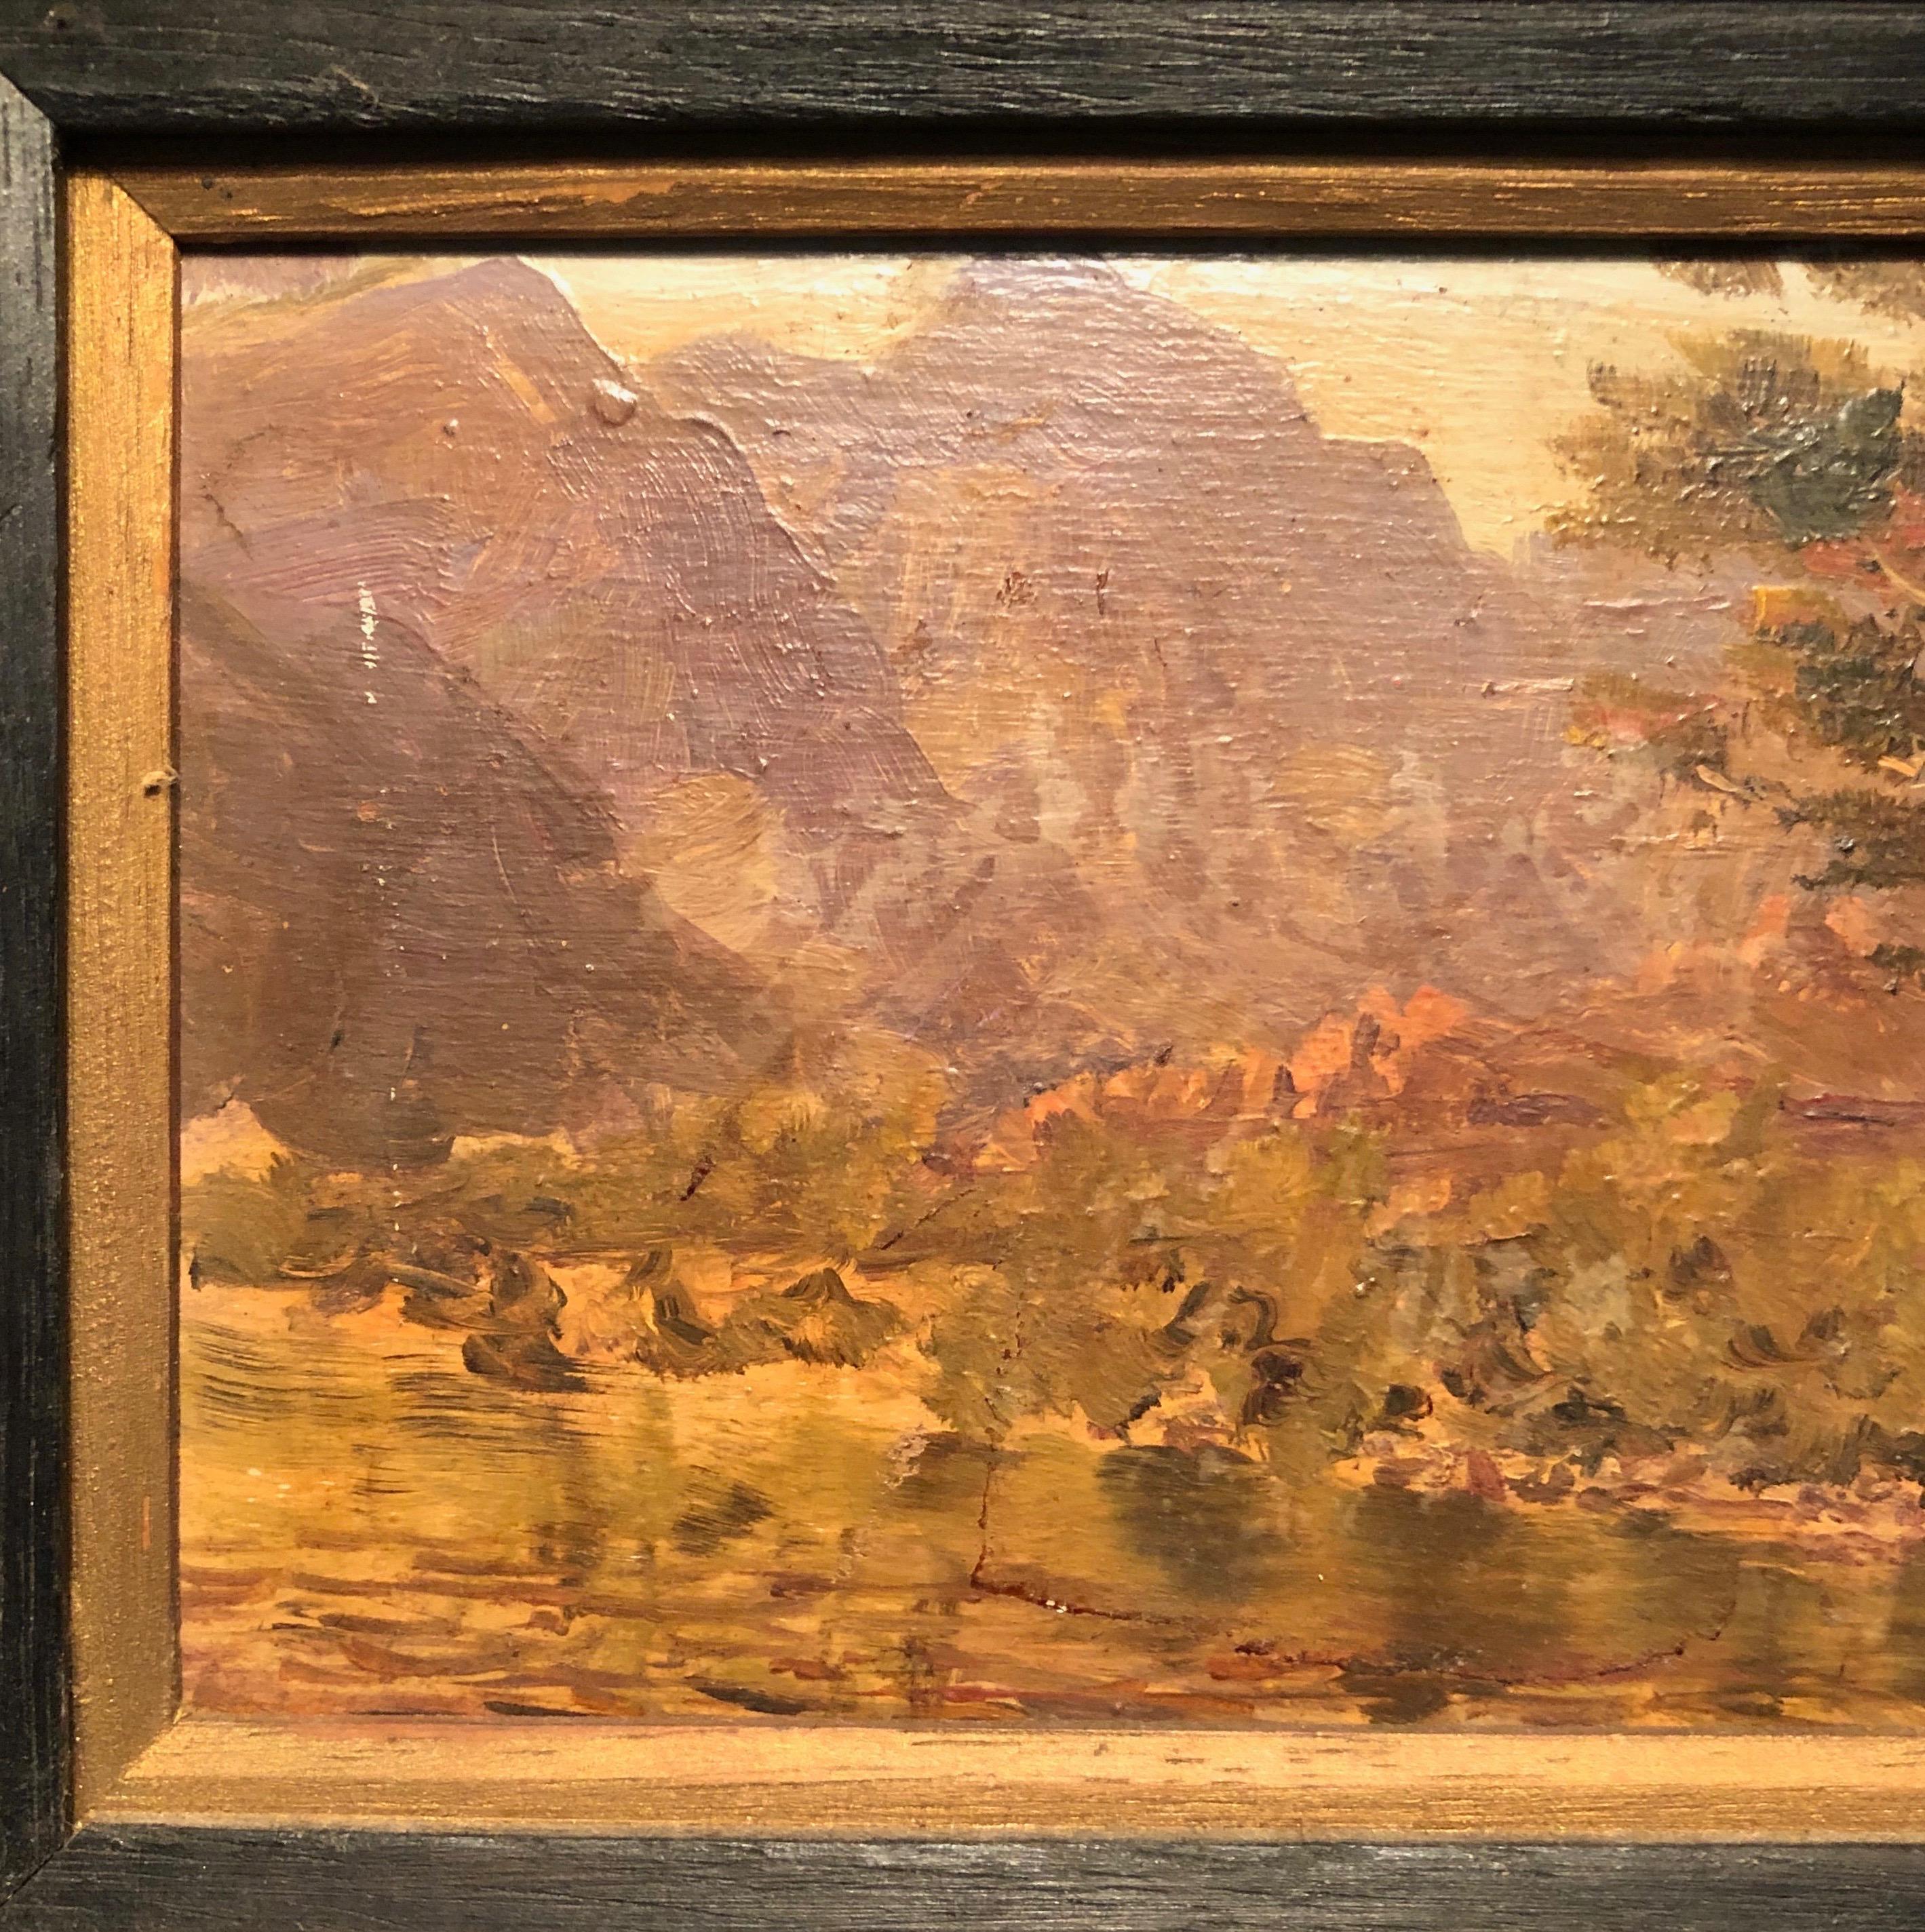 Early 20th century American School Western Landscape

A fine illuminated Western landscape. Original oil on board.

Dimensions 8.5